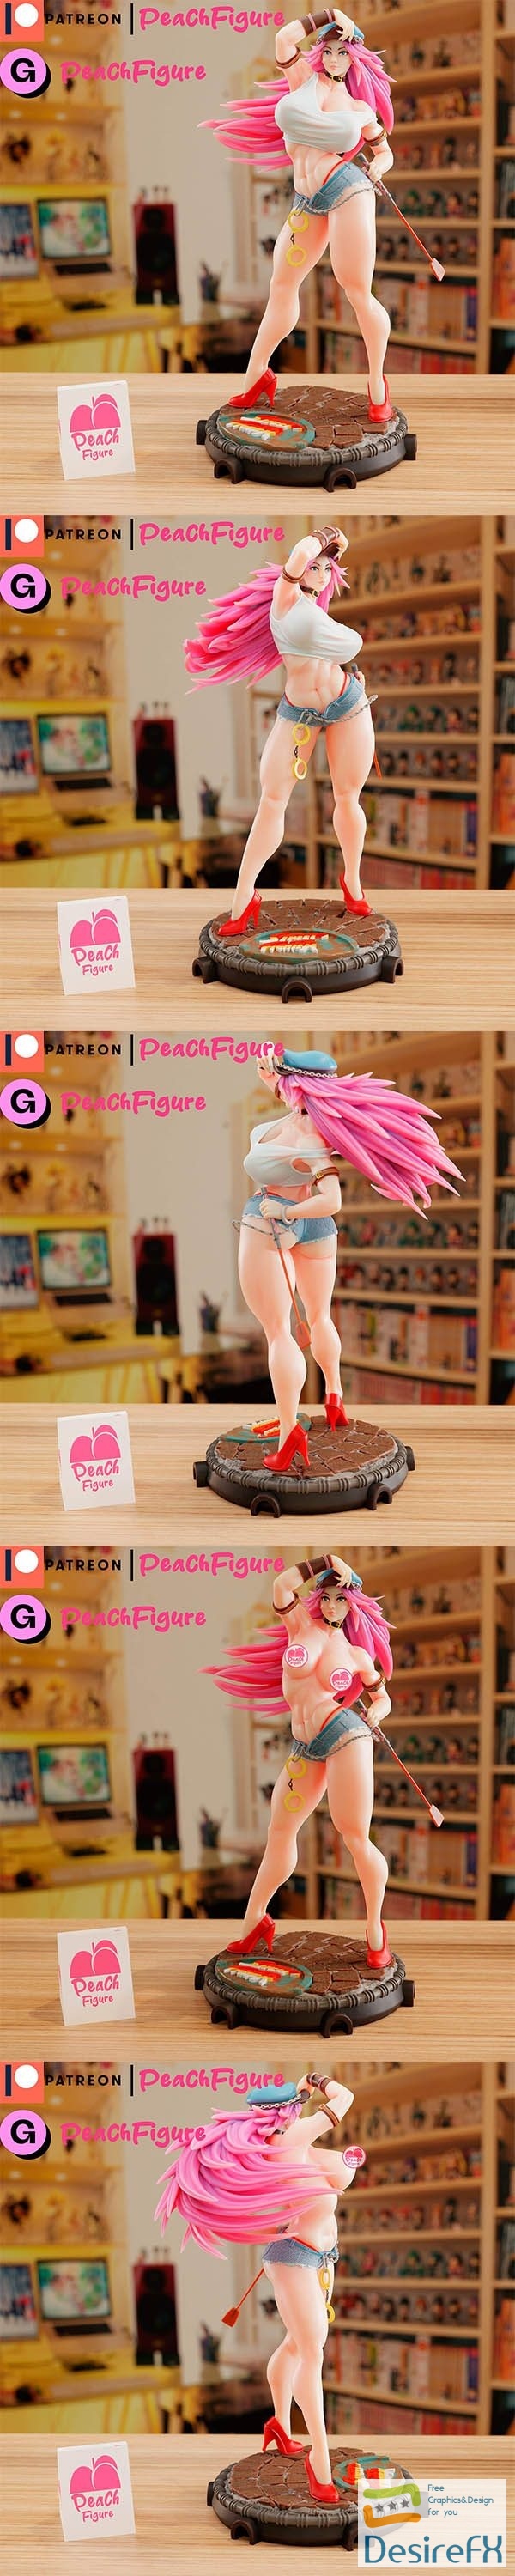 Peach Figure – Poison Street Fighter – 3D Print